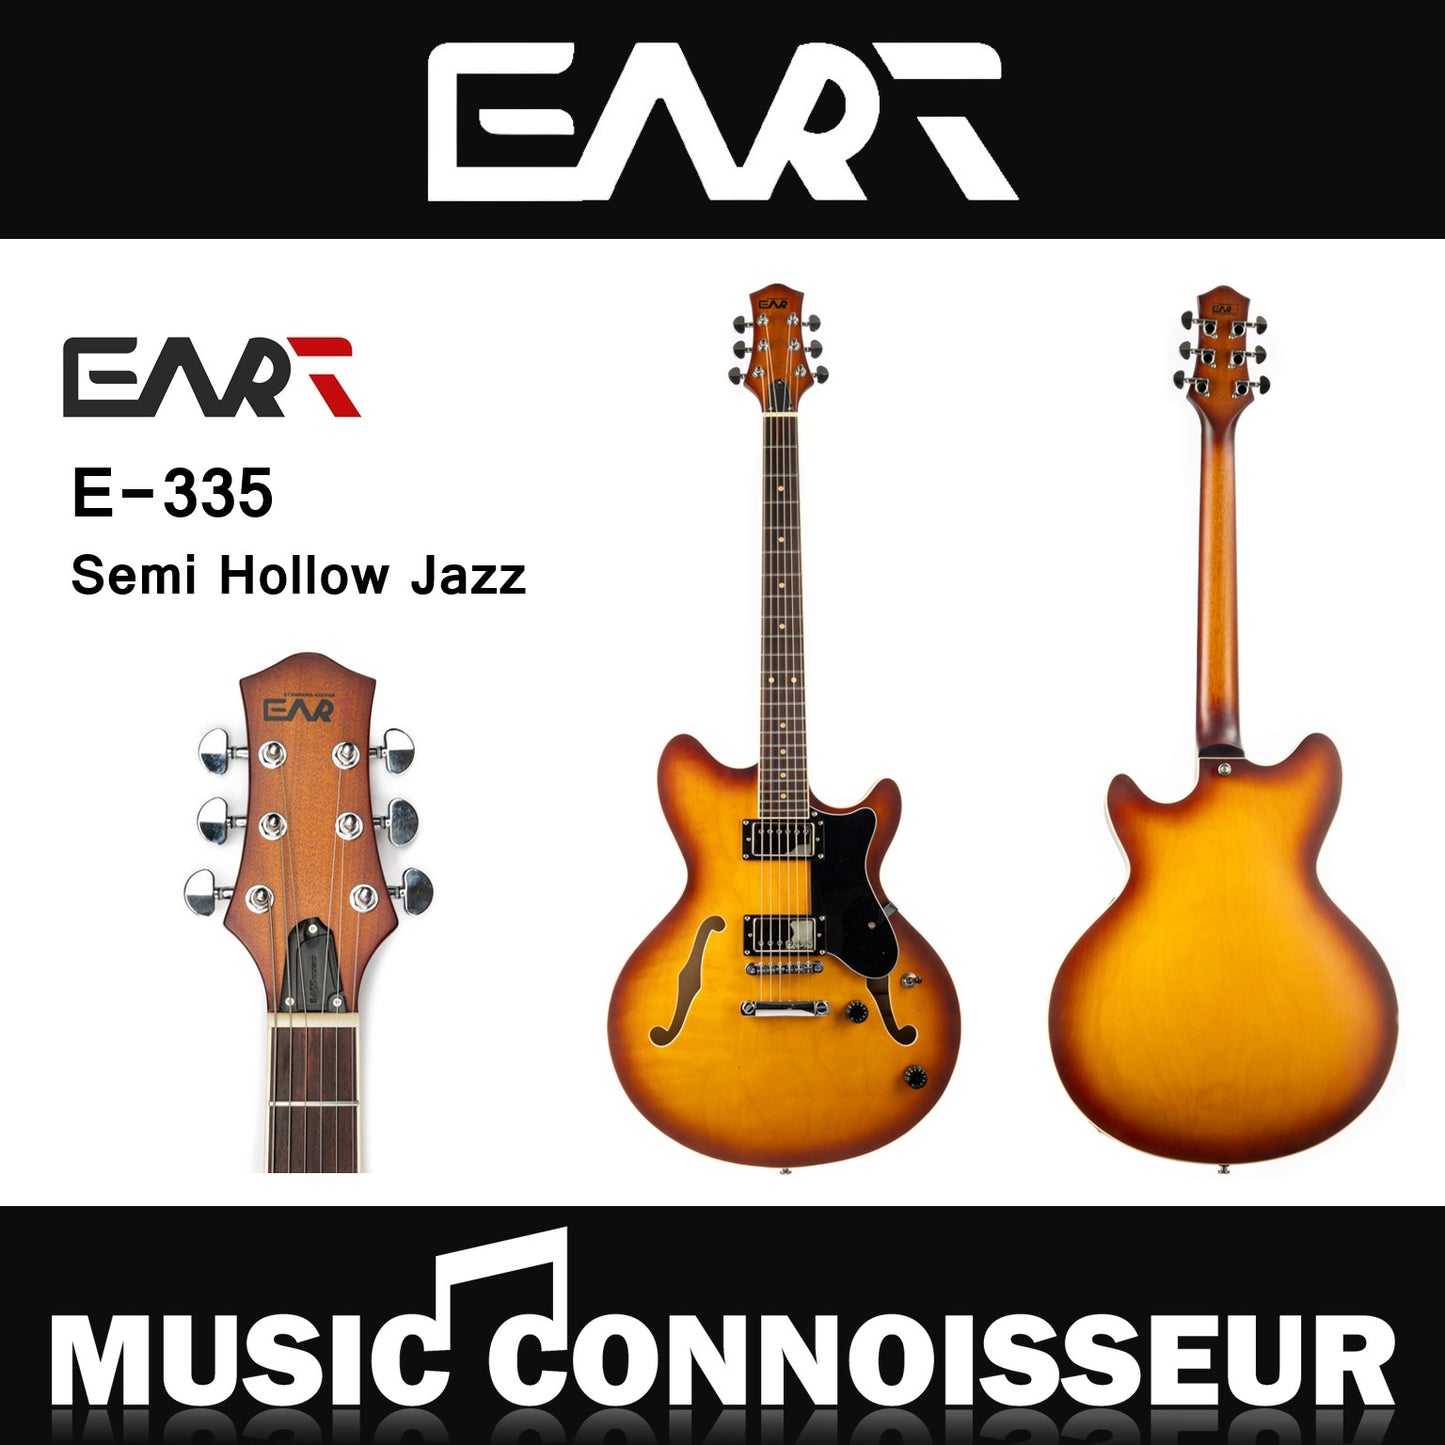 EART E-335 Semi Hollow Jazz Electric Guitar (Sunburst)